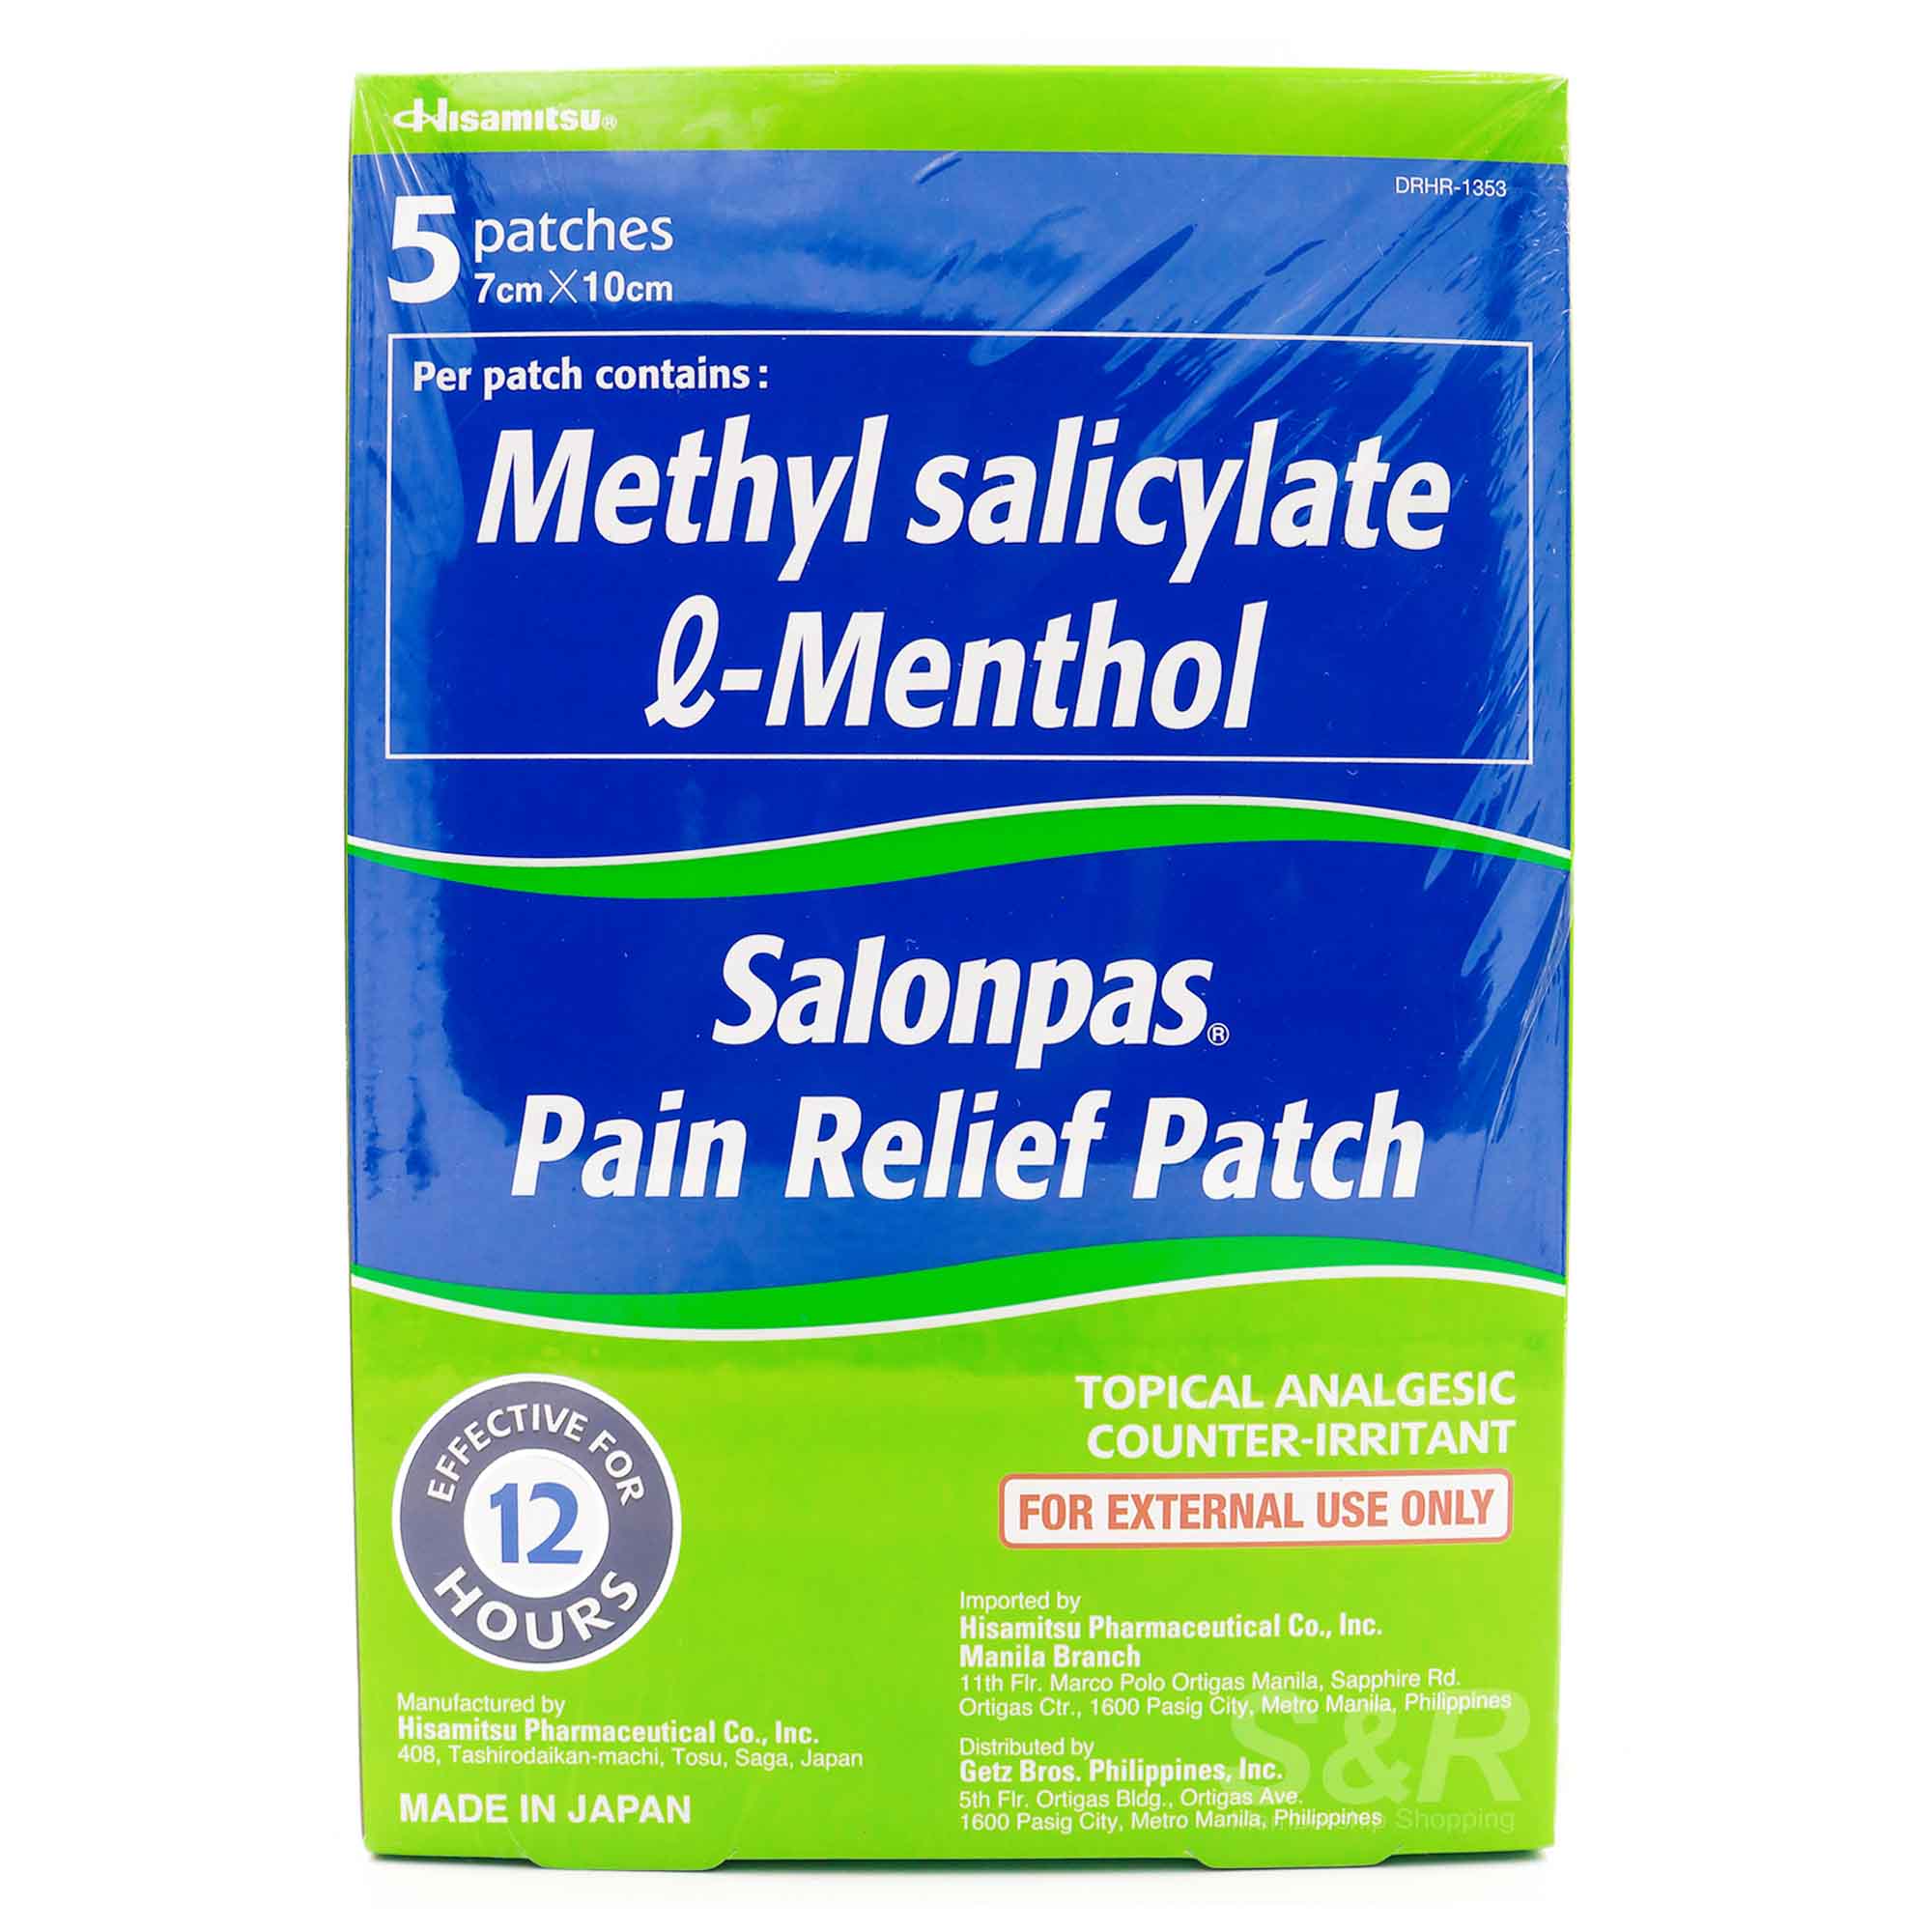 Hisamitsu Salonpas Pain Relief Patch 3 packs